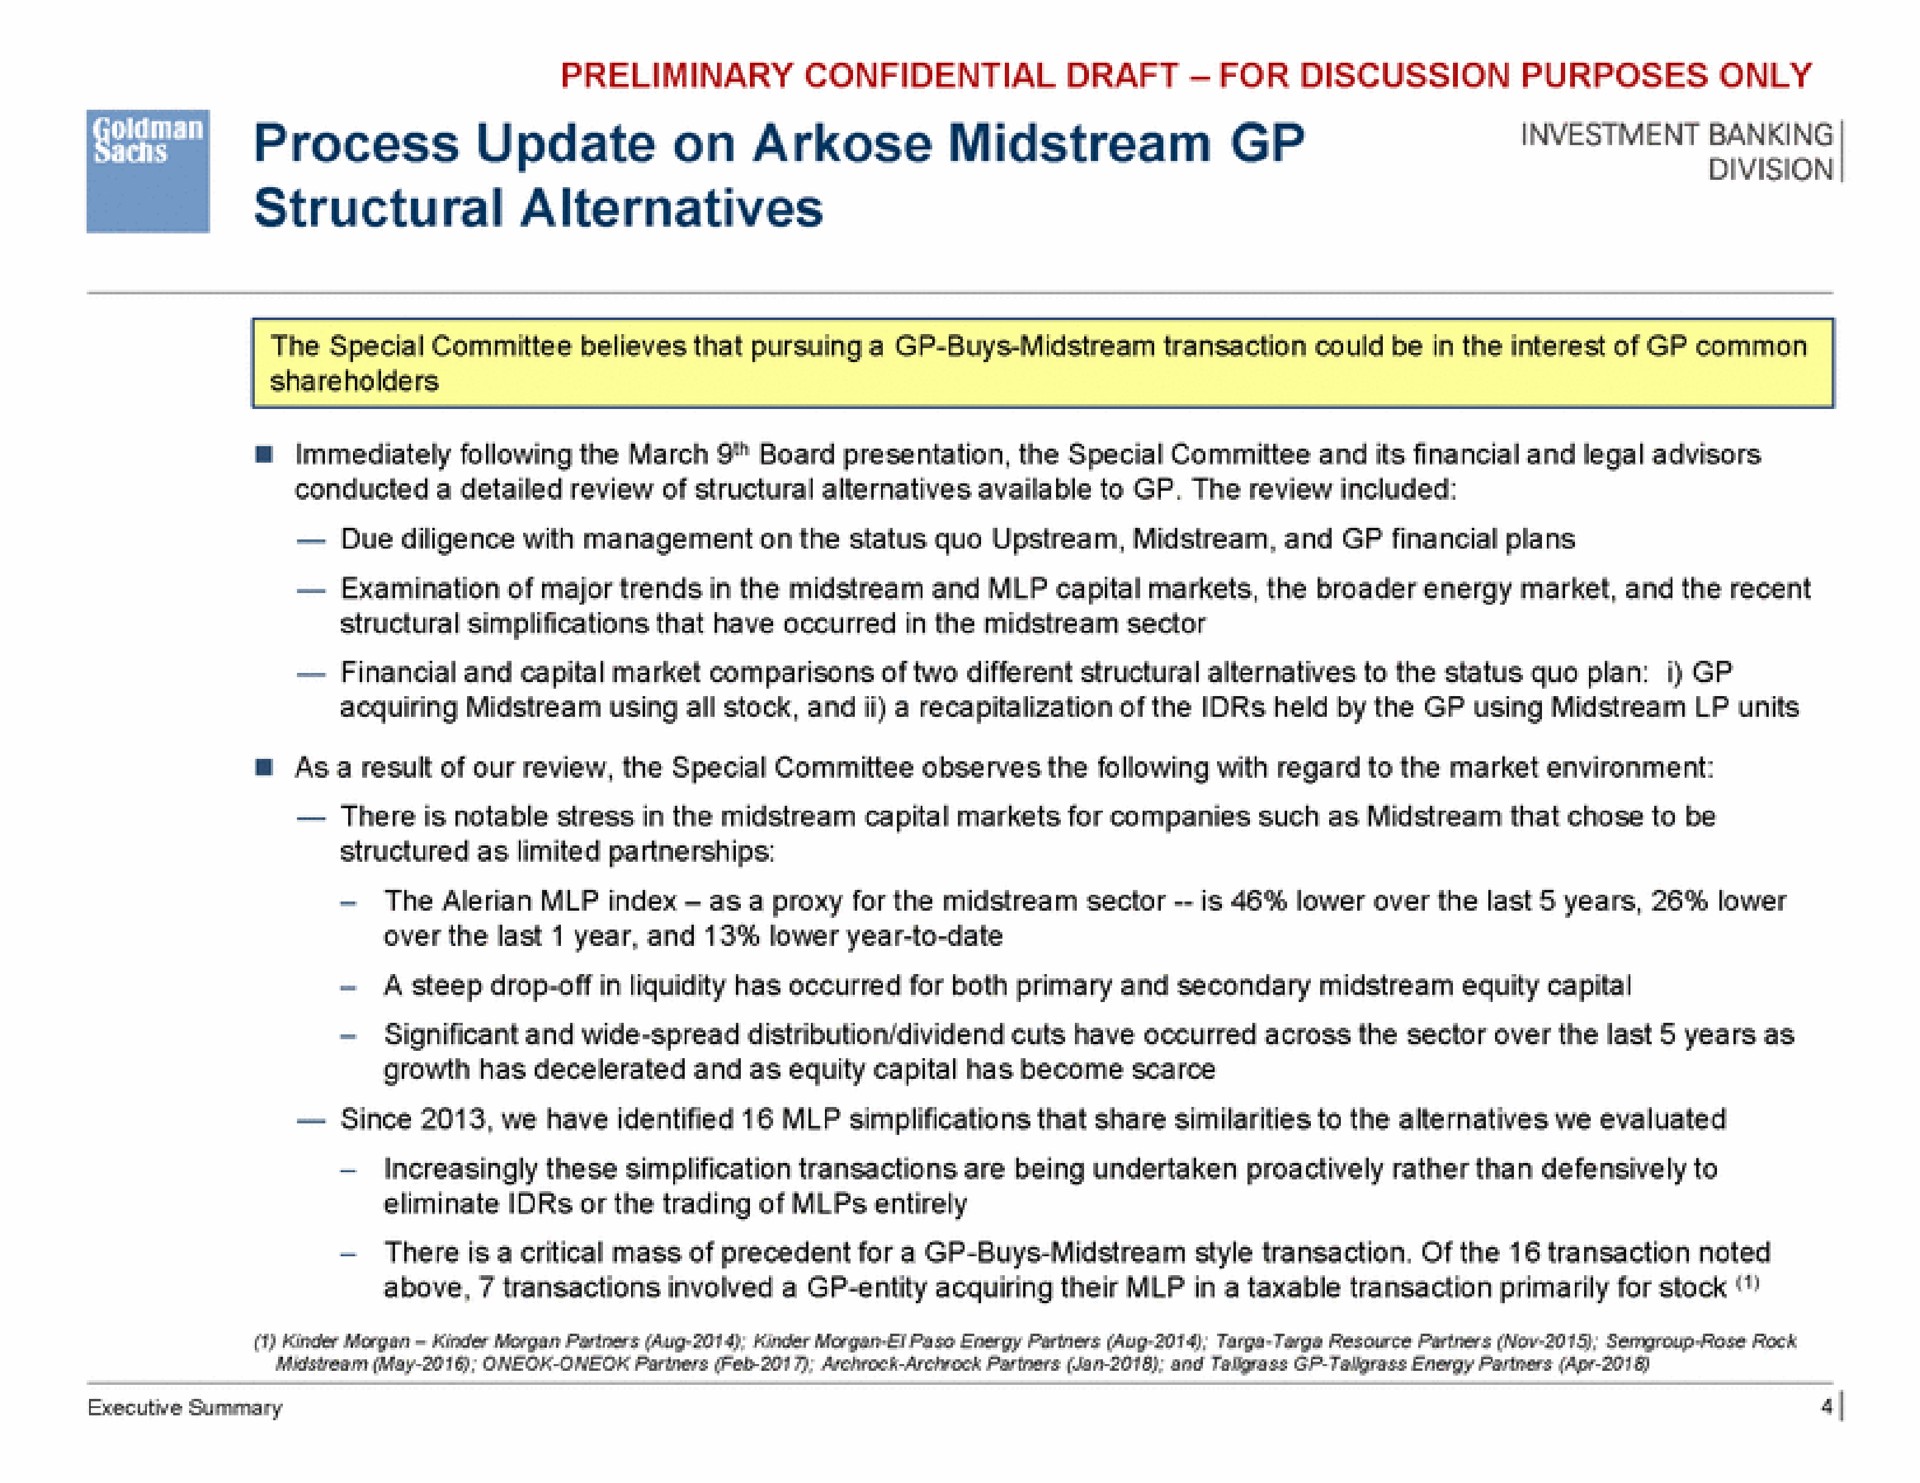 process update on arkose midstream structural alternatives | Goldman Sachs